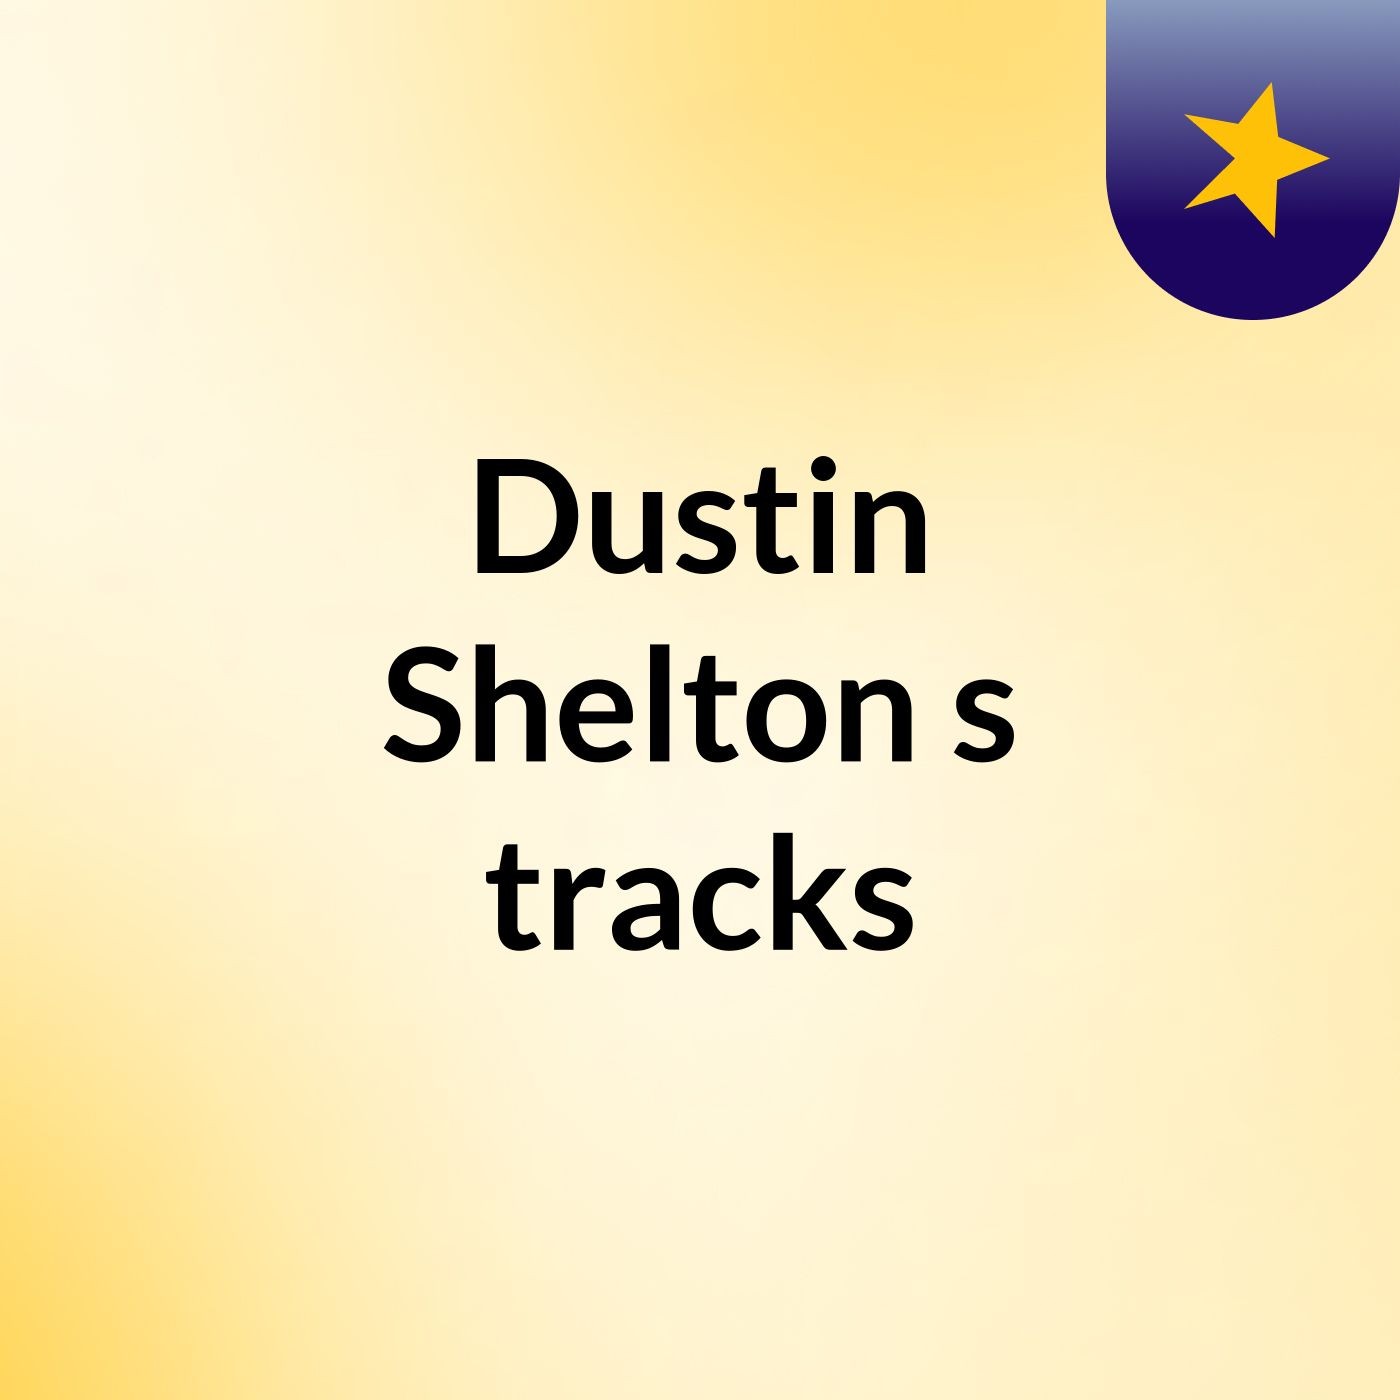 Dustin Shelton's tracks